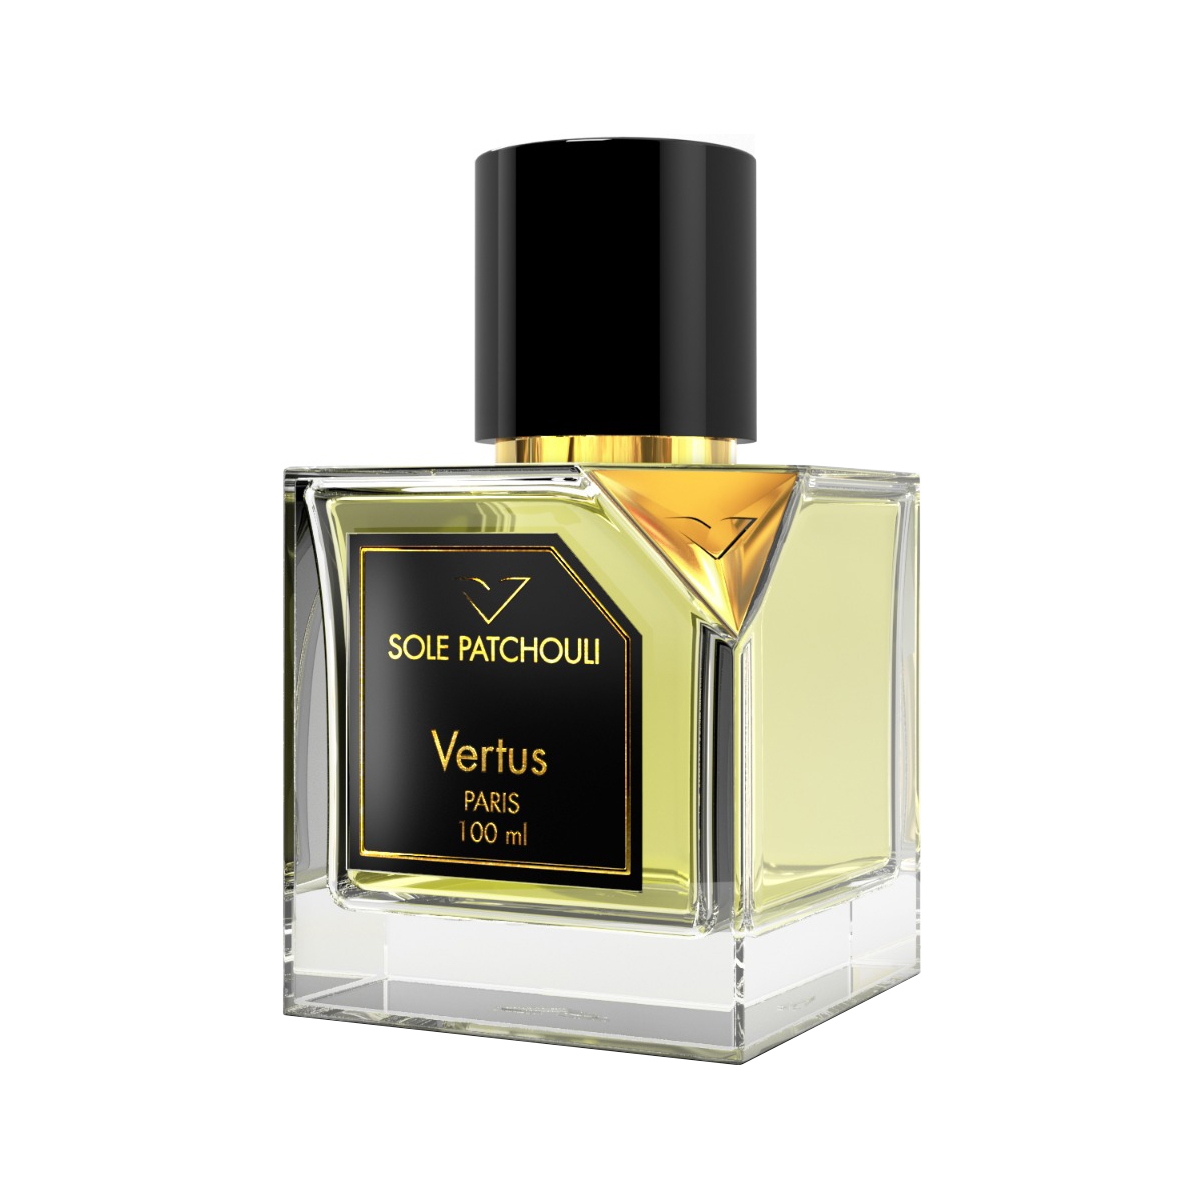 Sole Patchouli Vertus Perfumes, Profumi Unisex, Arada Perfumes